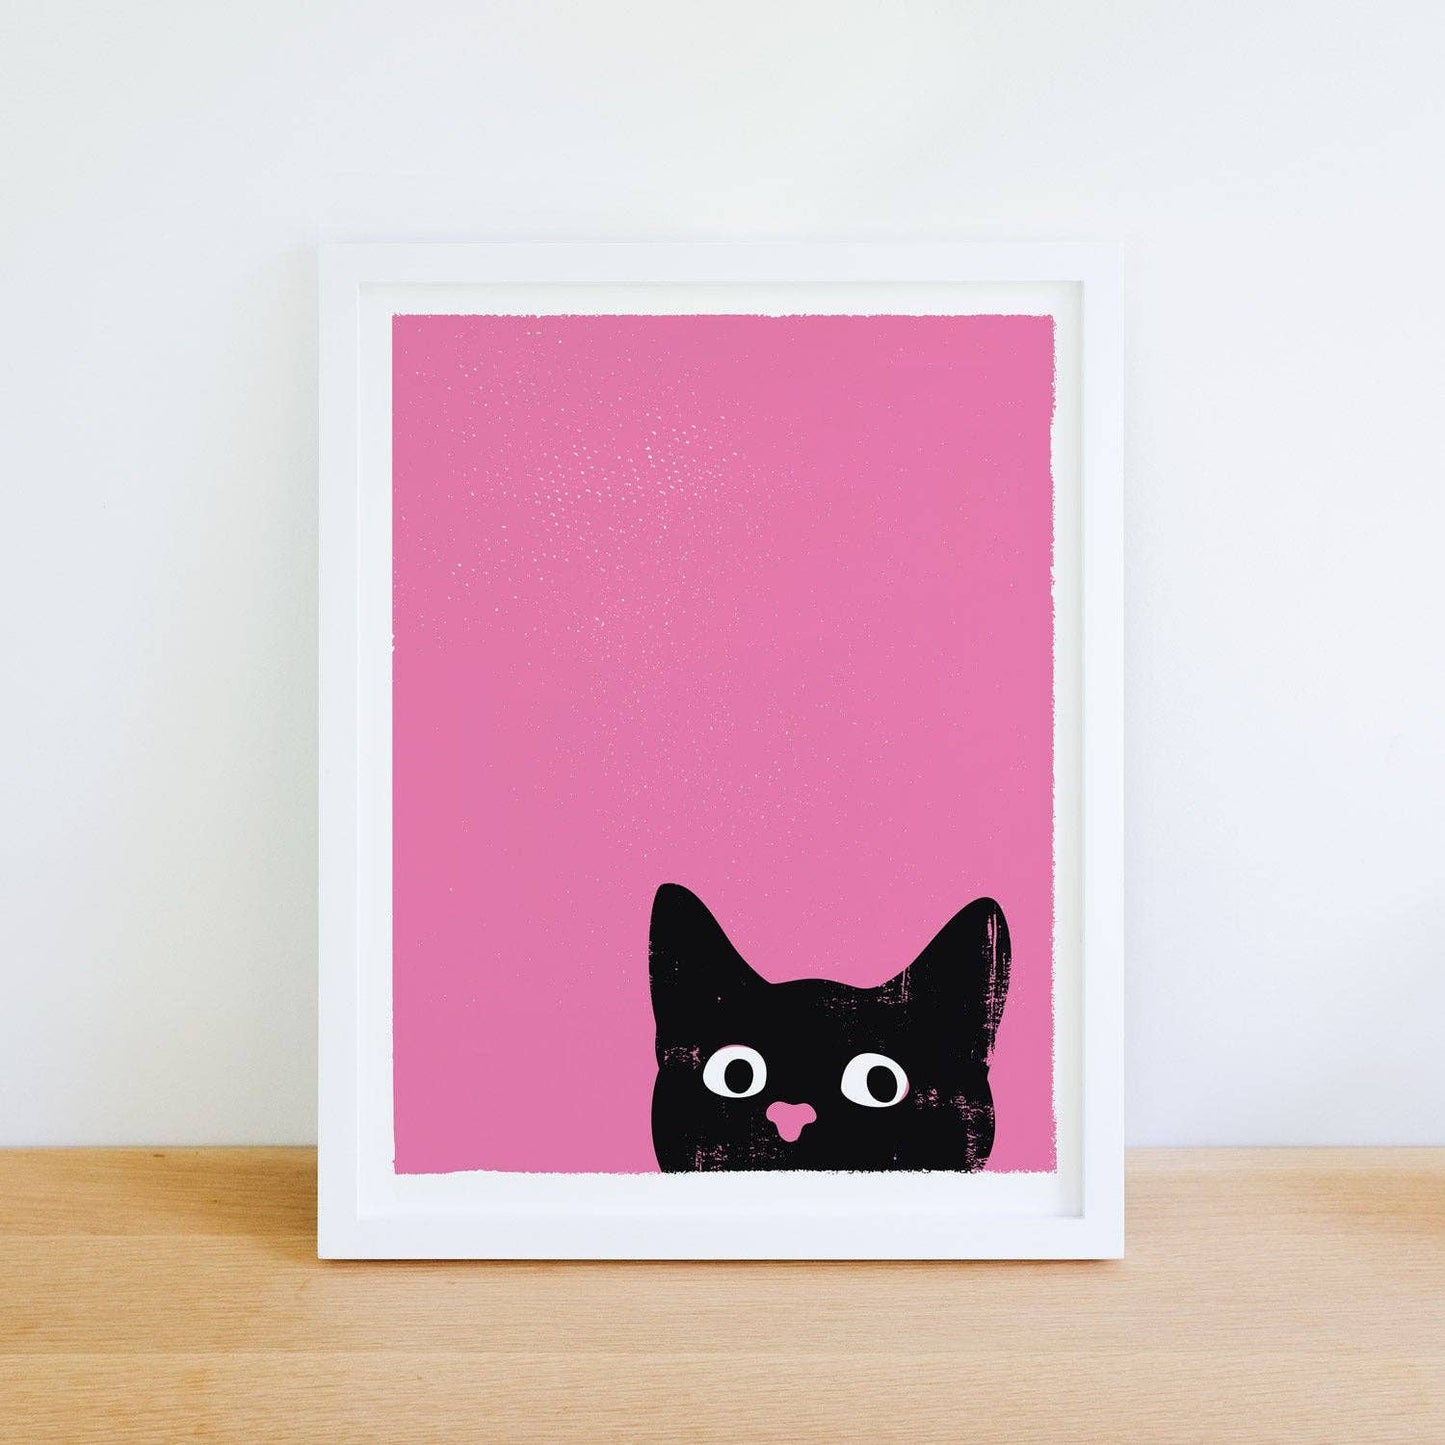 Small Black Cat Art Print Oh Hai Print Kitty Wall Art